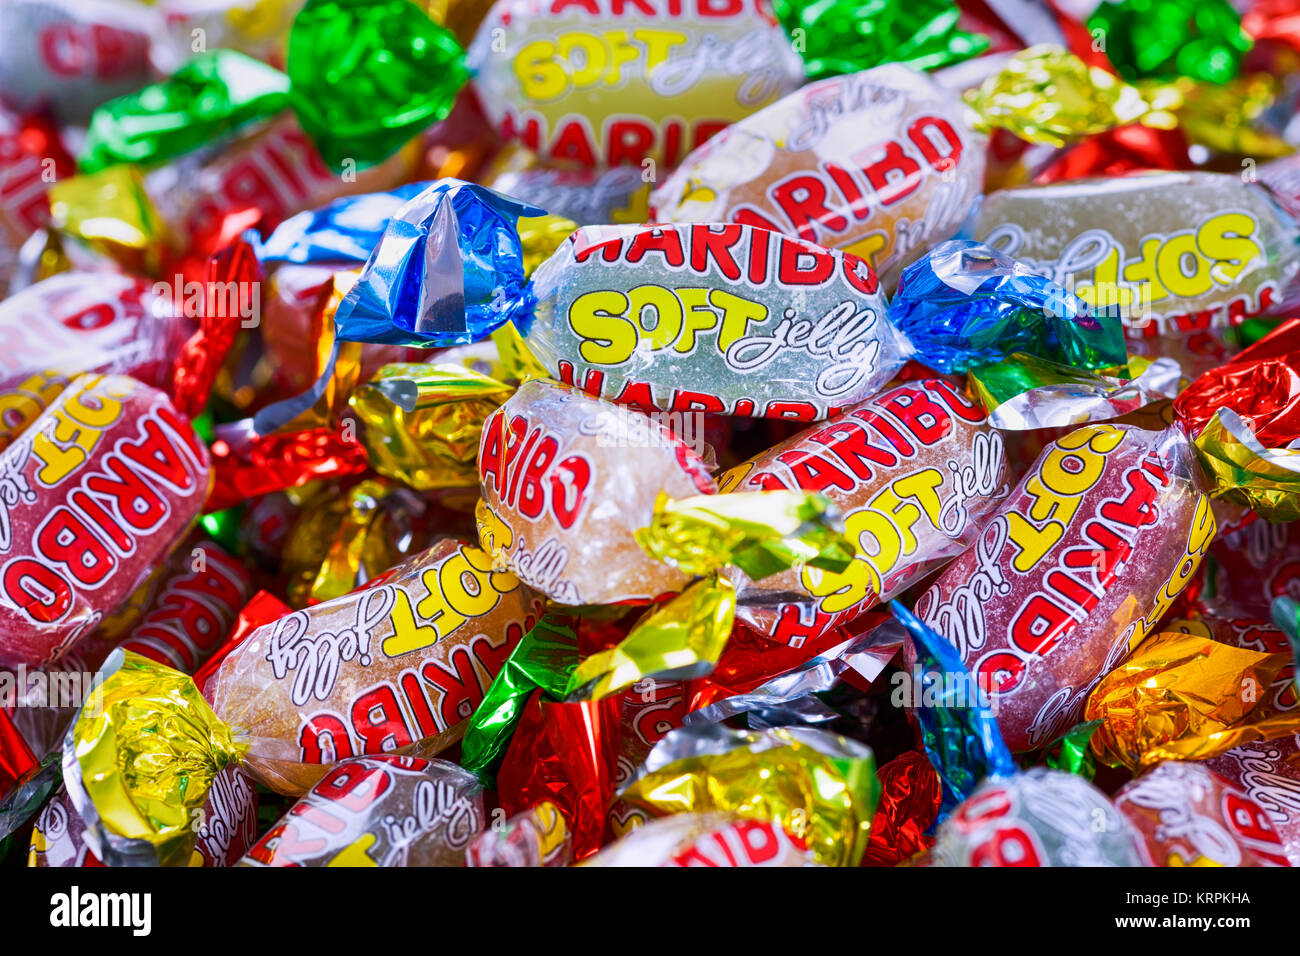 Tambov, Russian Federation - April 20, 2013 Haribo soft jelly candies. Full frame. Studio shot. Stock Photo